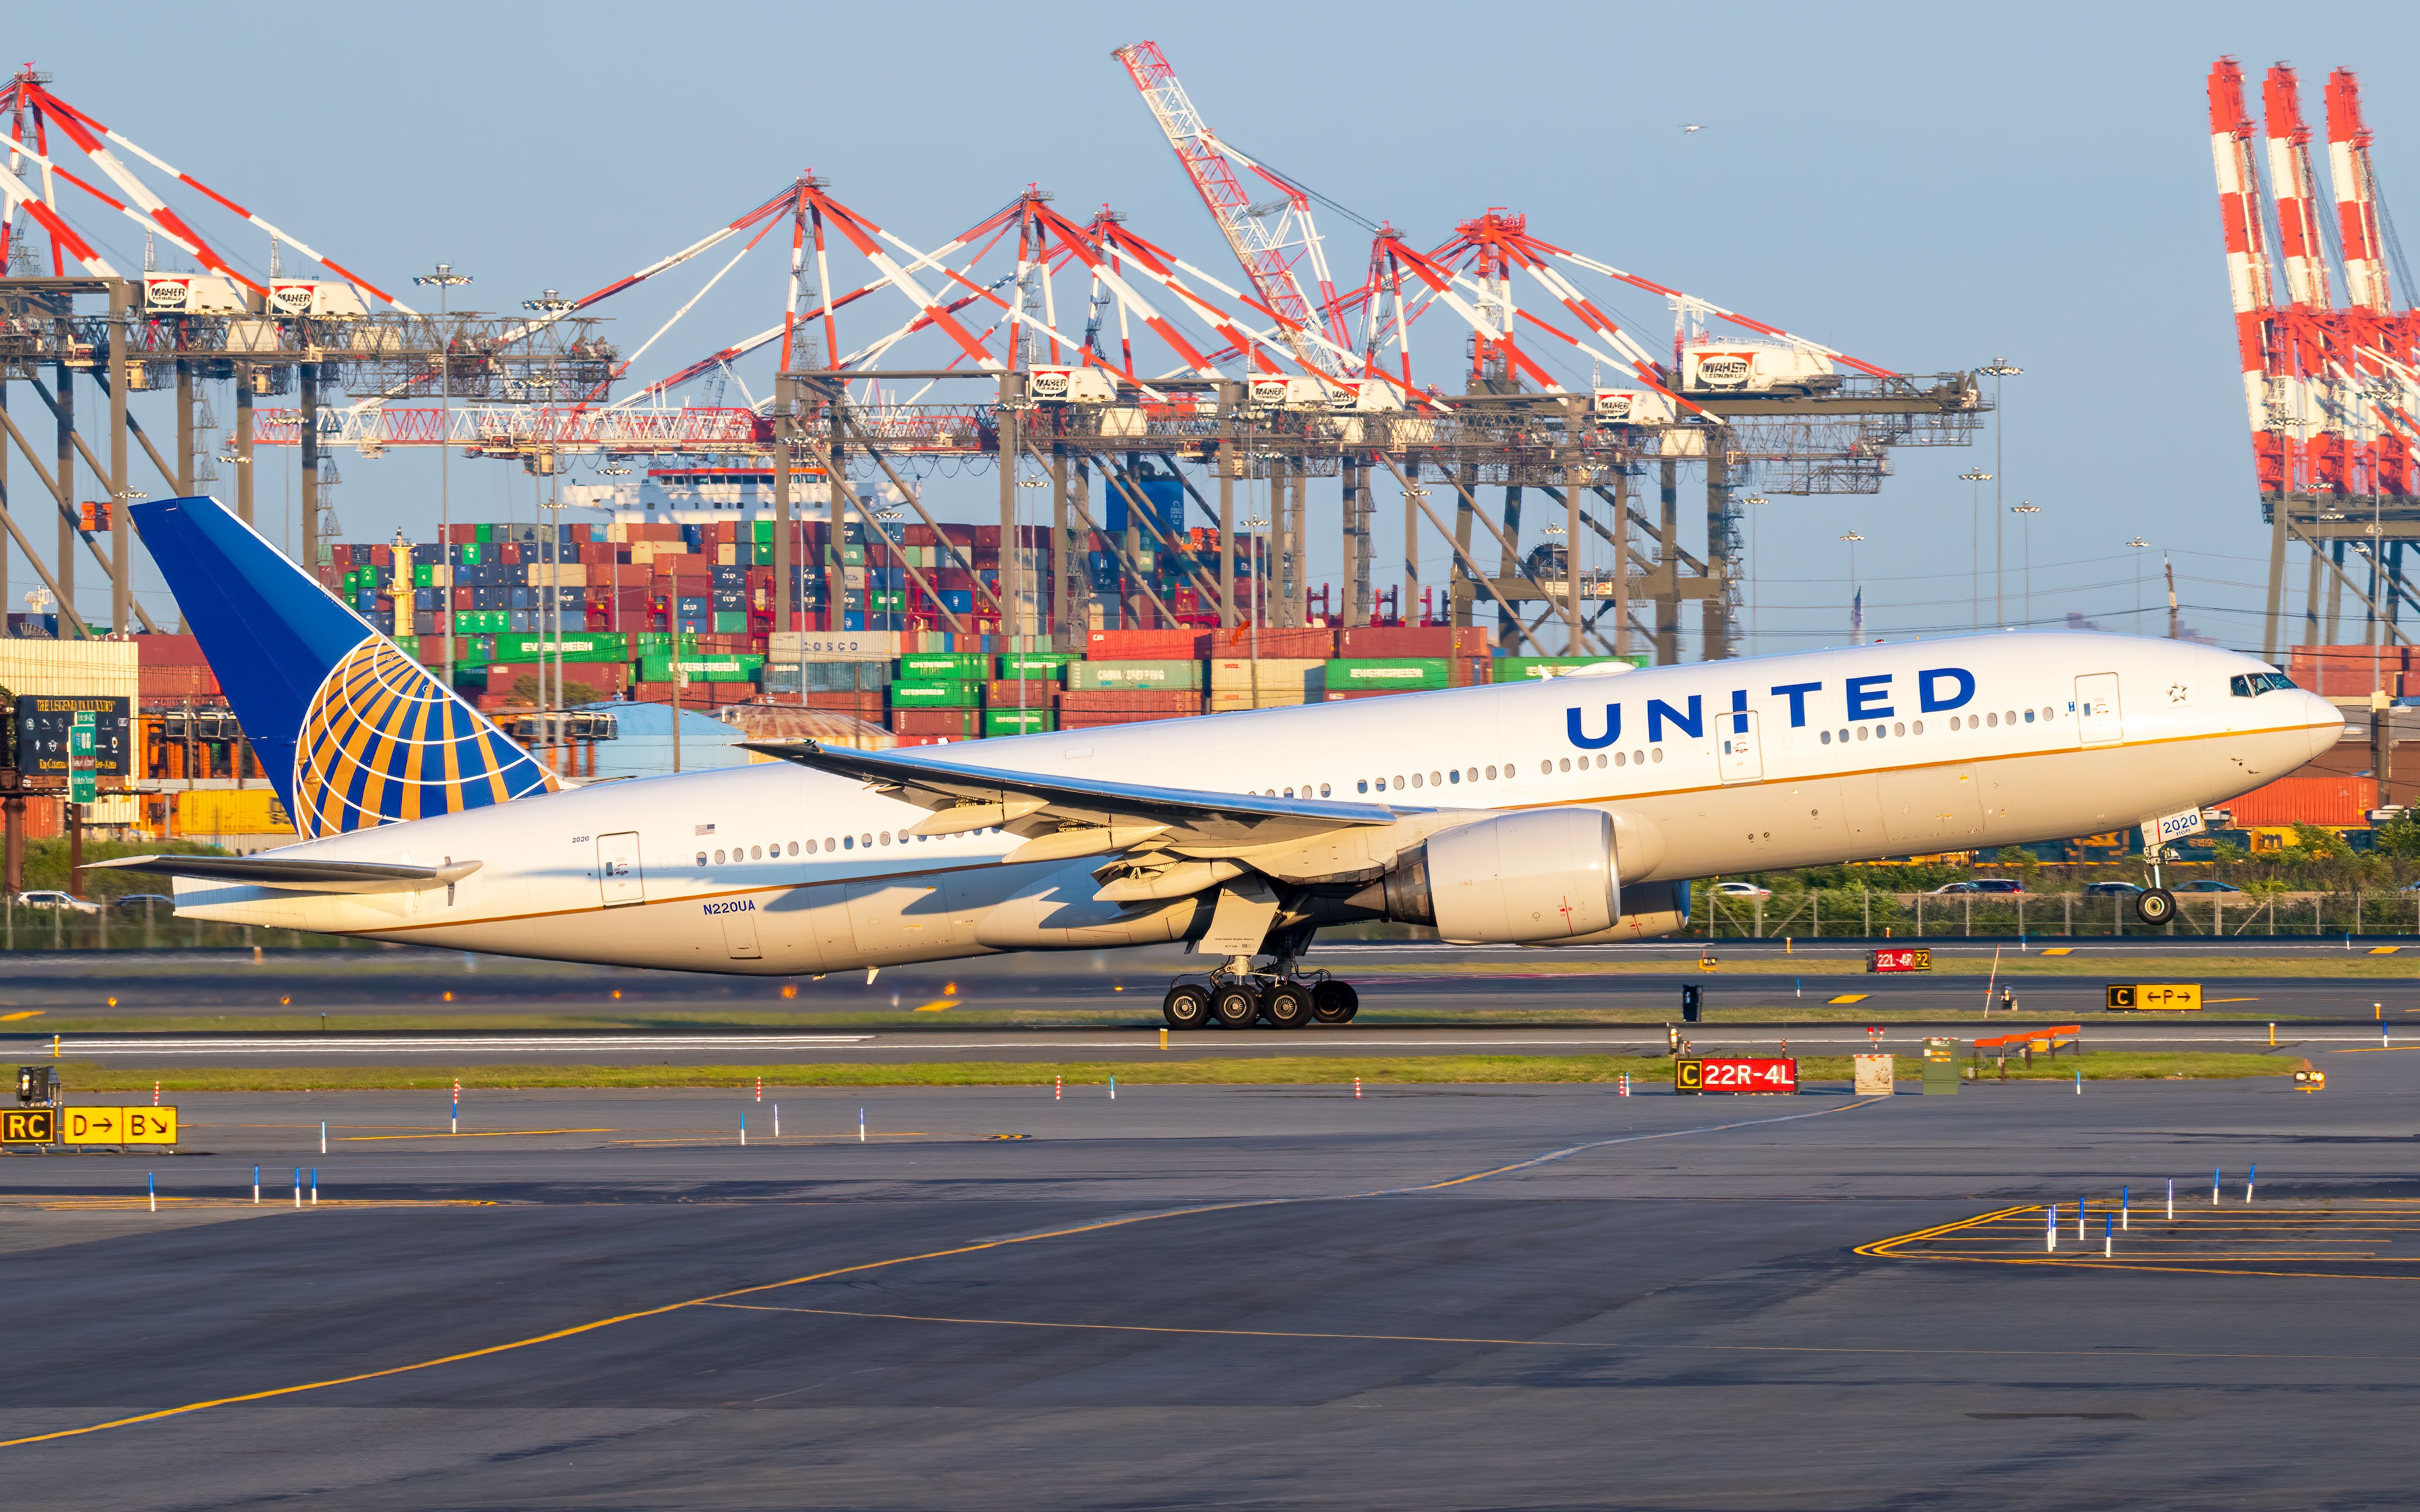 United Airlines B777-200ER taking off at Newark